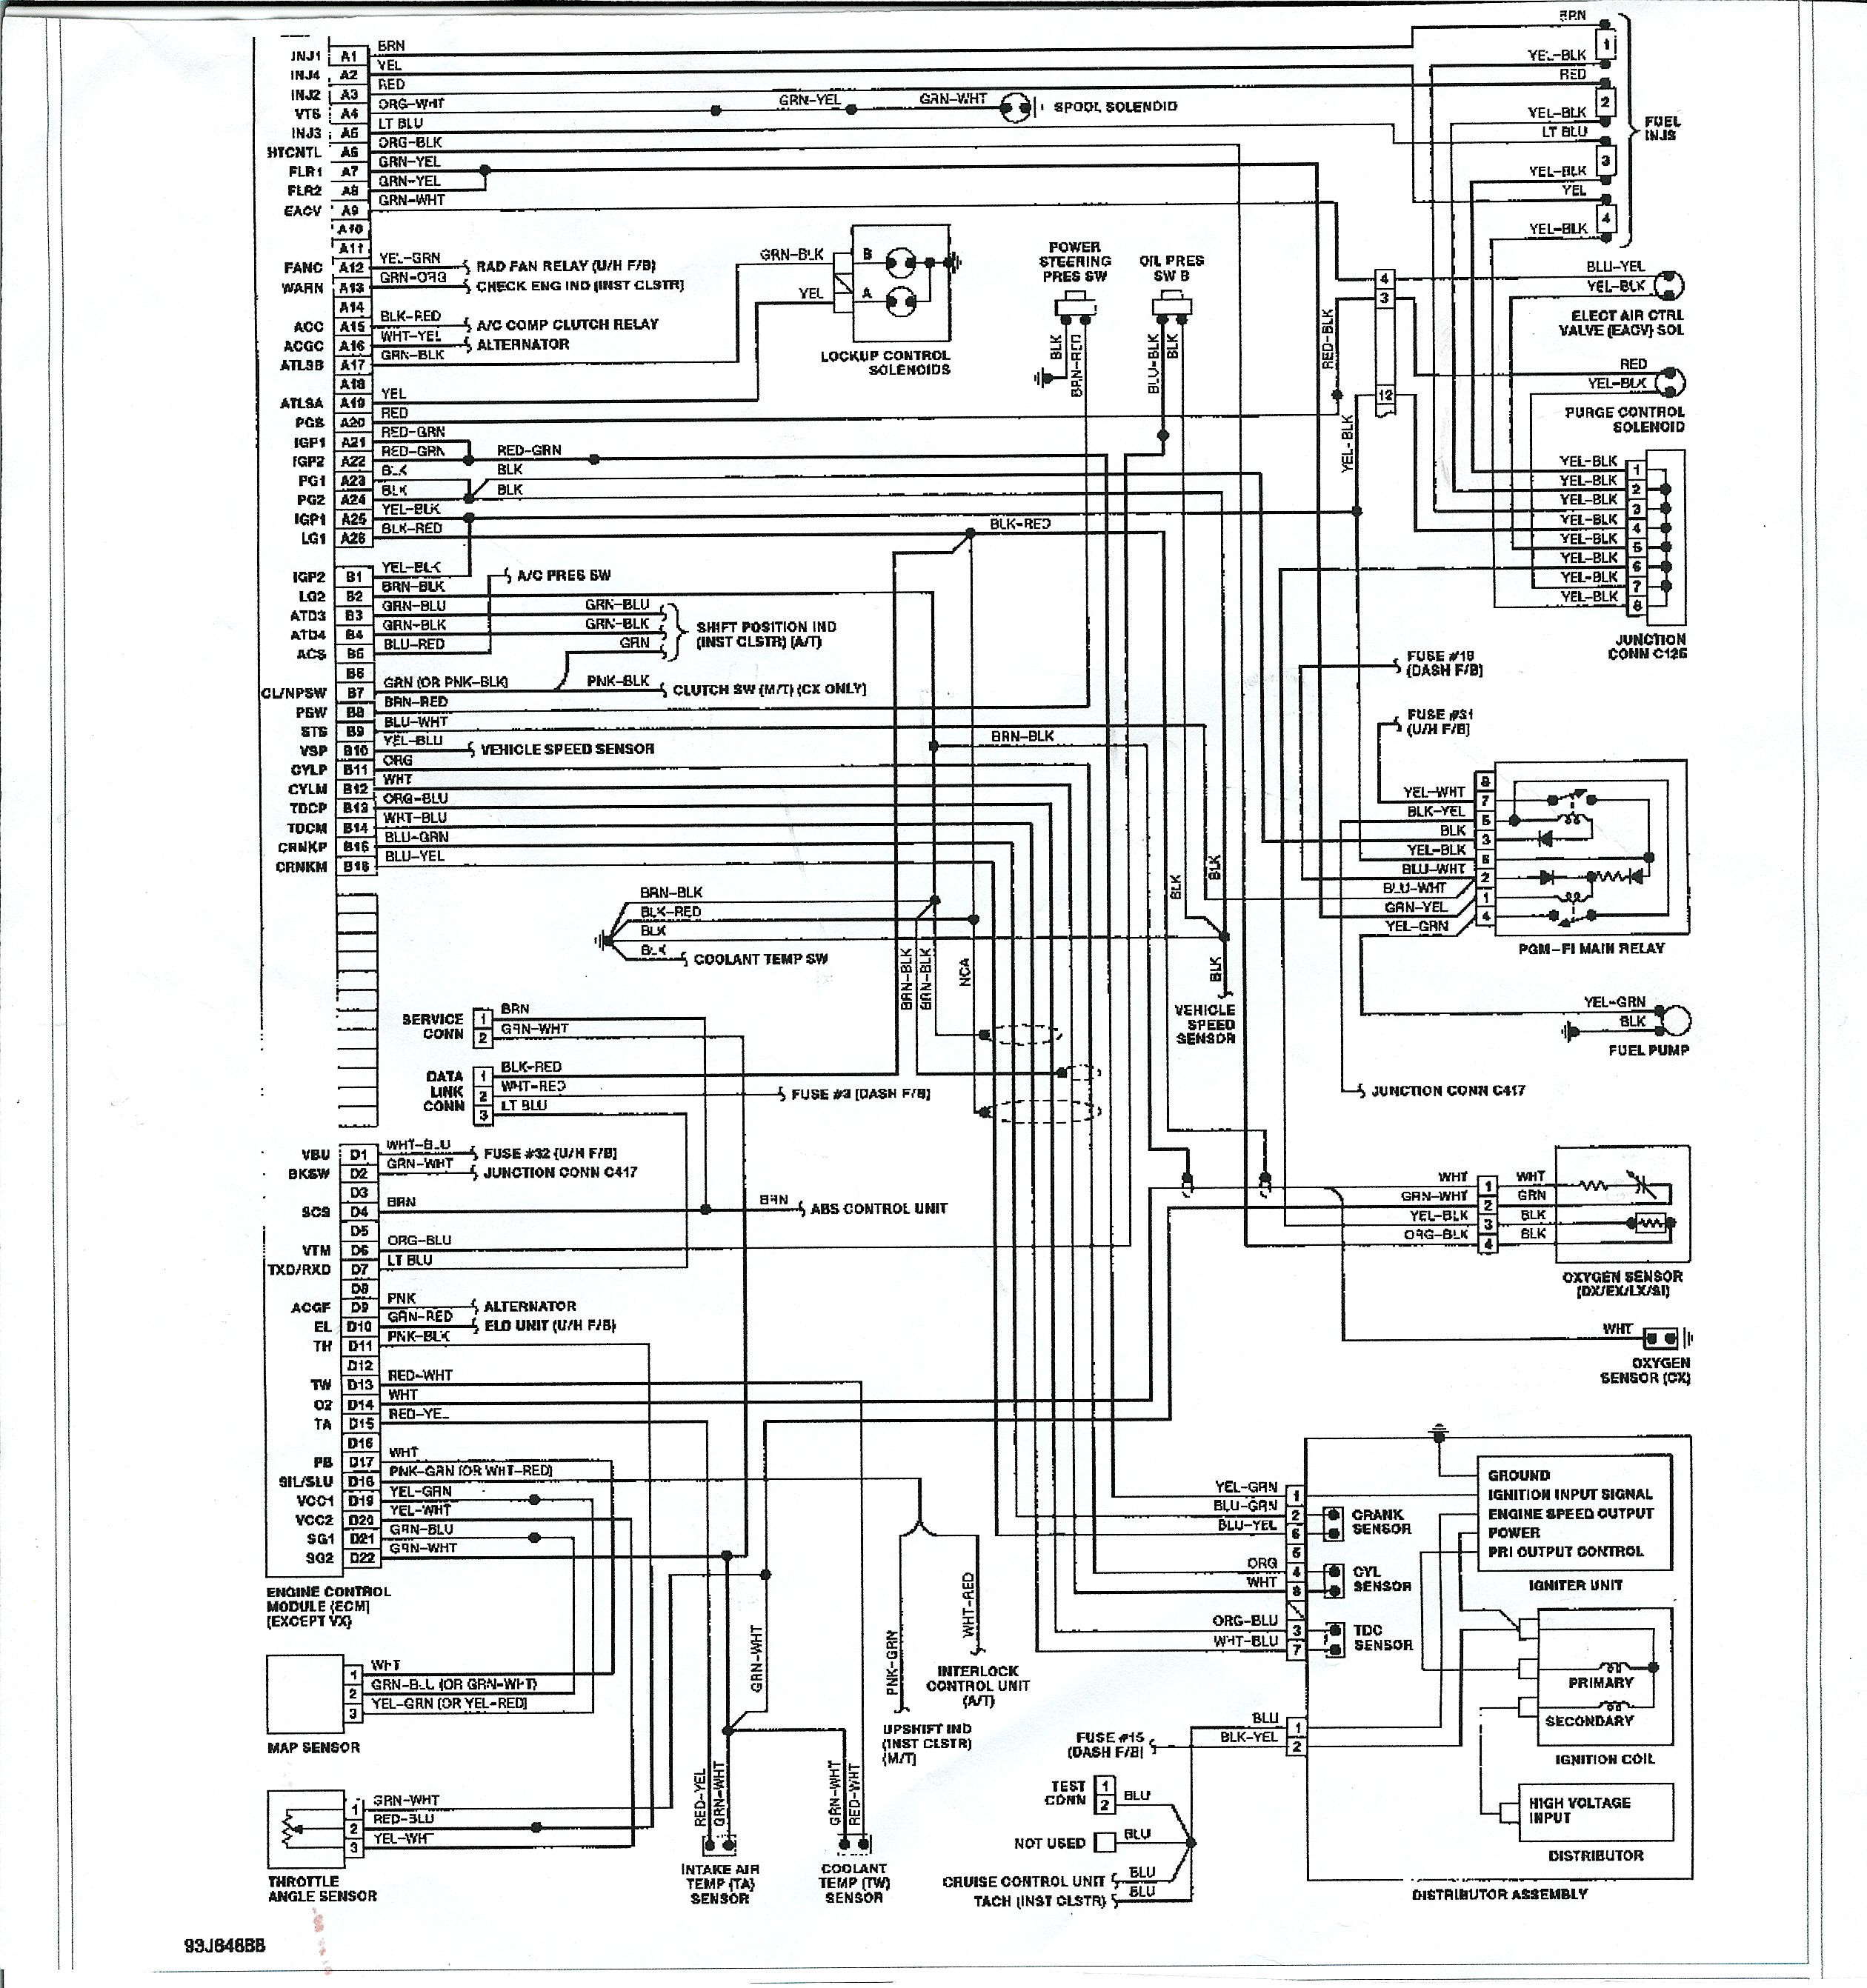 2001 Honda Crv Engine Diagram Awesome Wiring Diagram Honda Civic Everything You Need to Of 2001 Honda Crv Engine Diagram